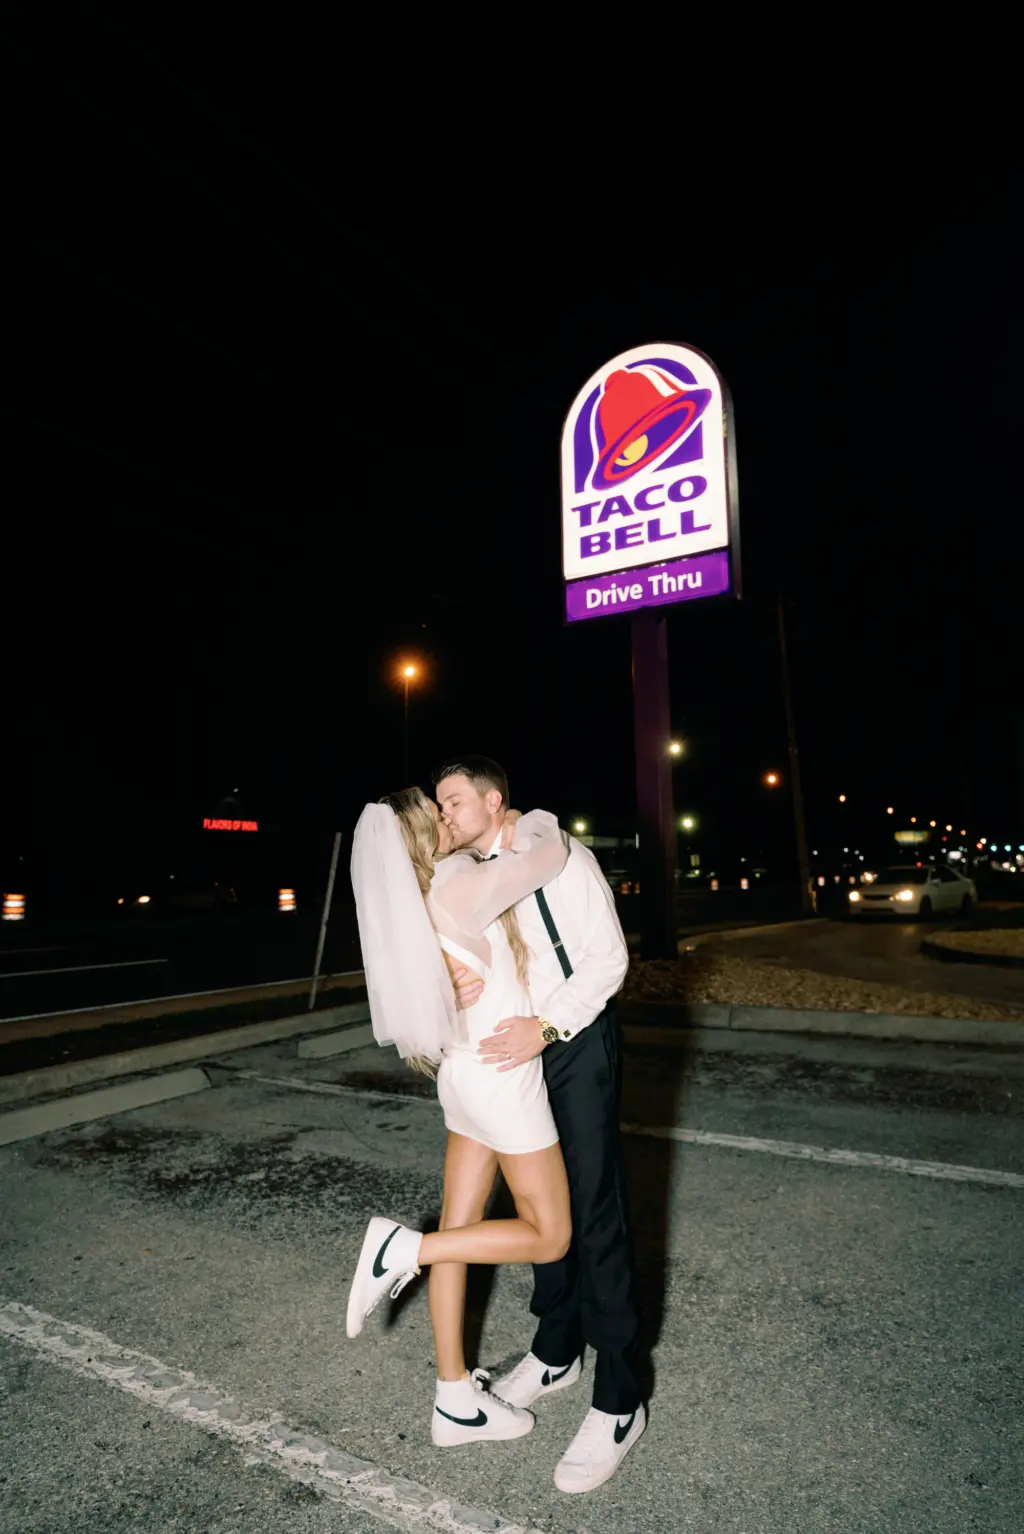 Taco Bell Wedding Reception After Party Portrait Inspiration | Sarasota Photographer Dewitt For Love